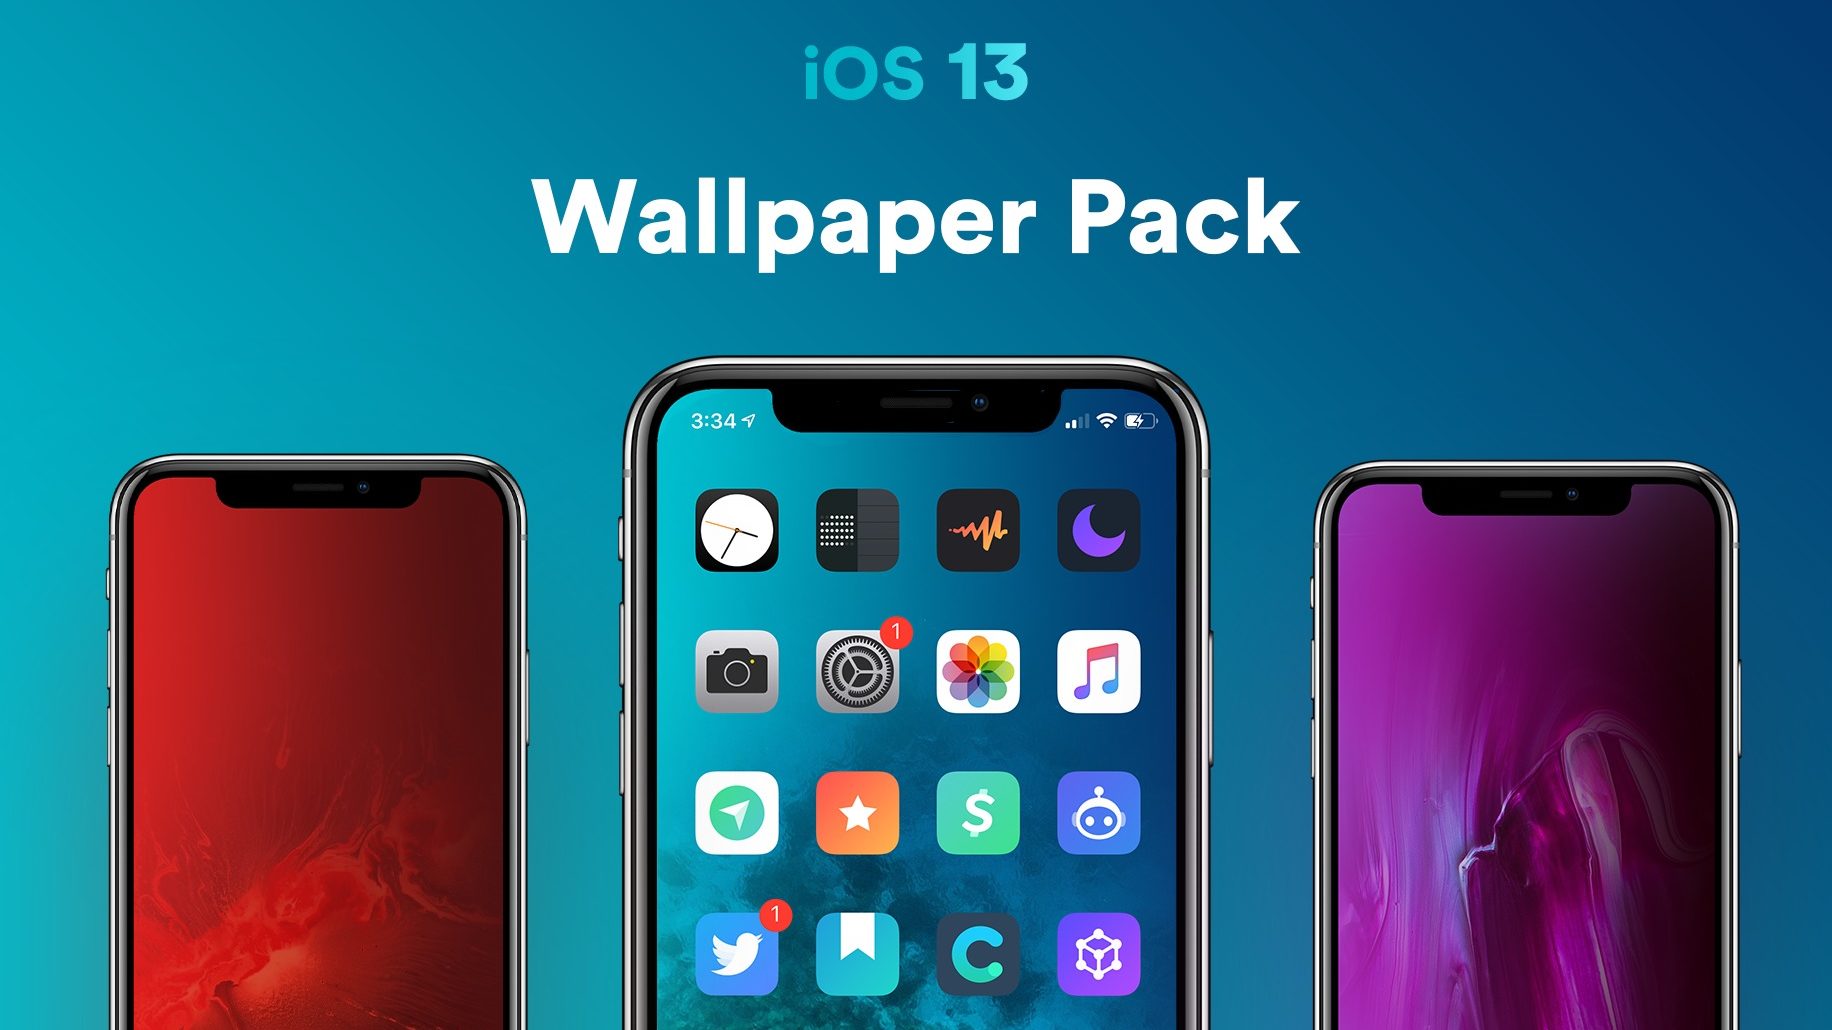 Apple iOS 13 wallpaper pack